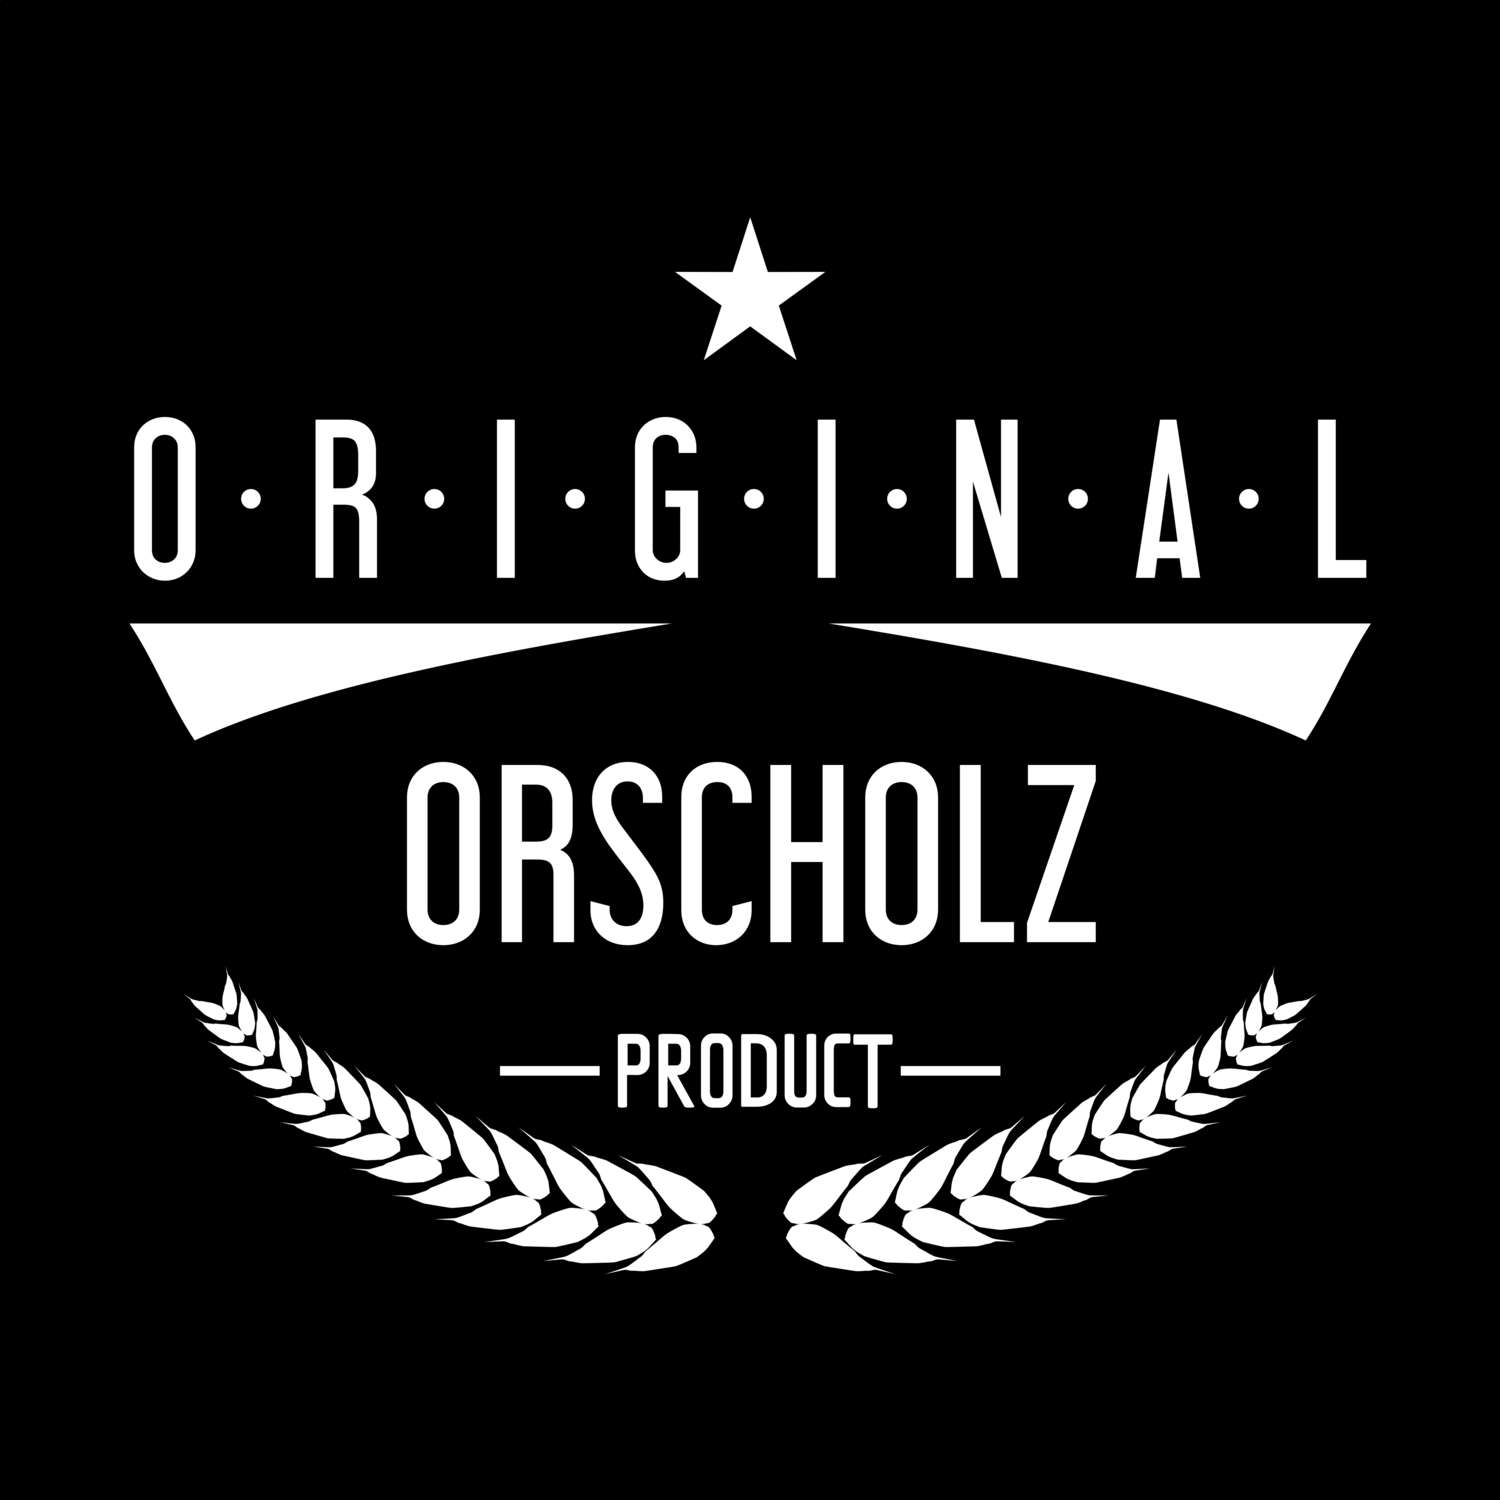 Orscholz T-Shirt »Original Product«